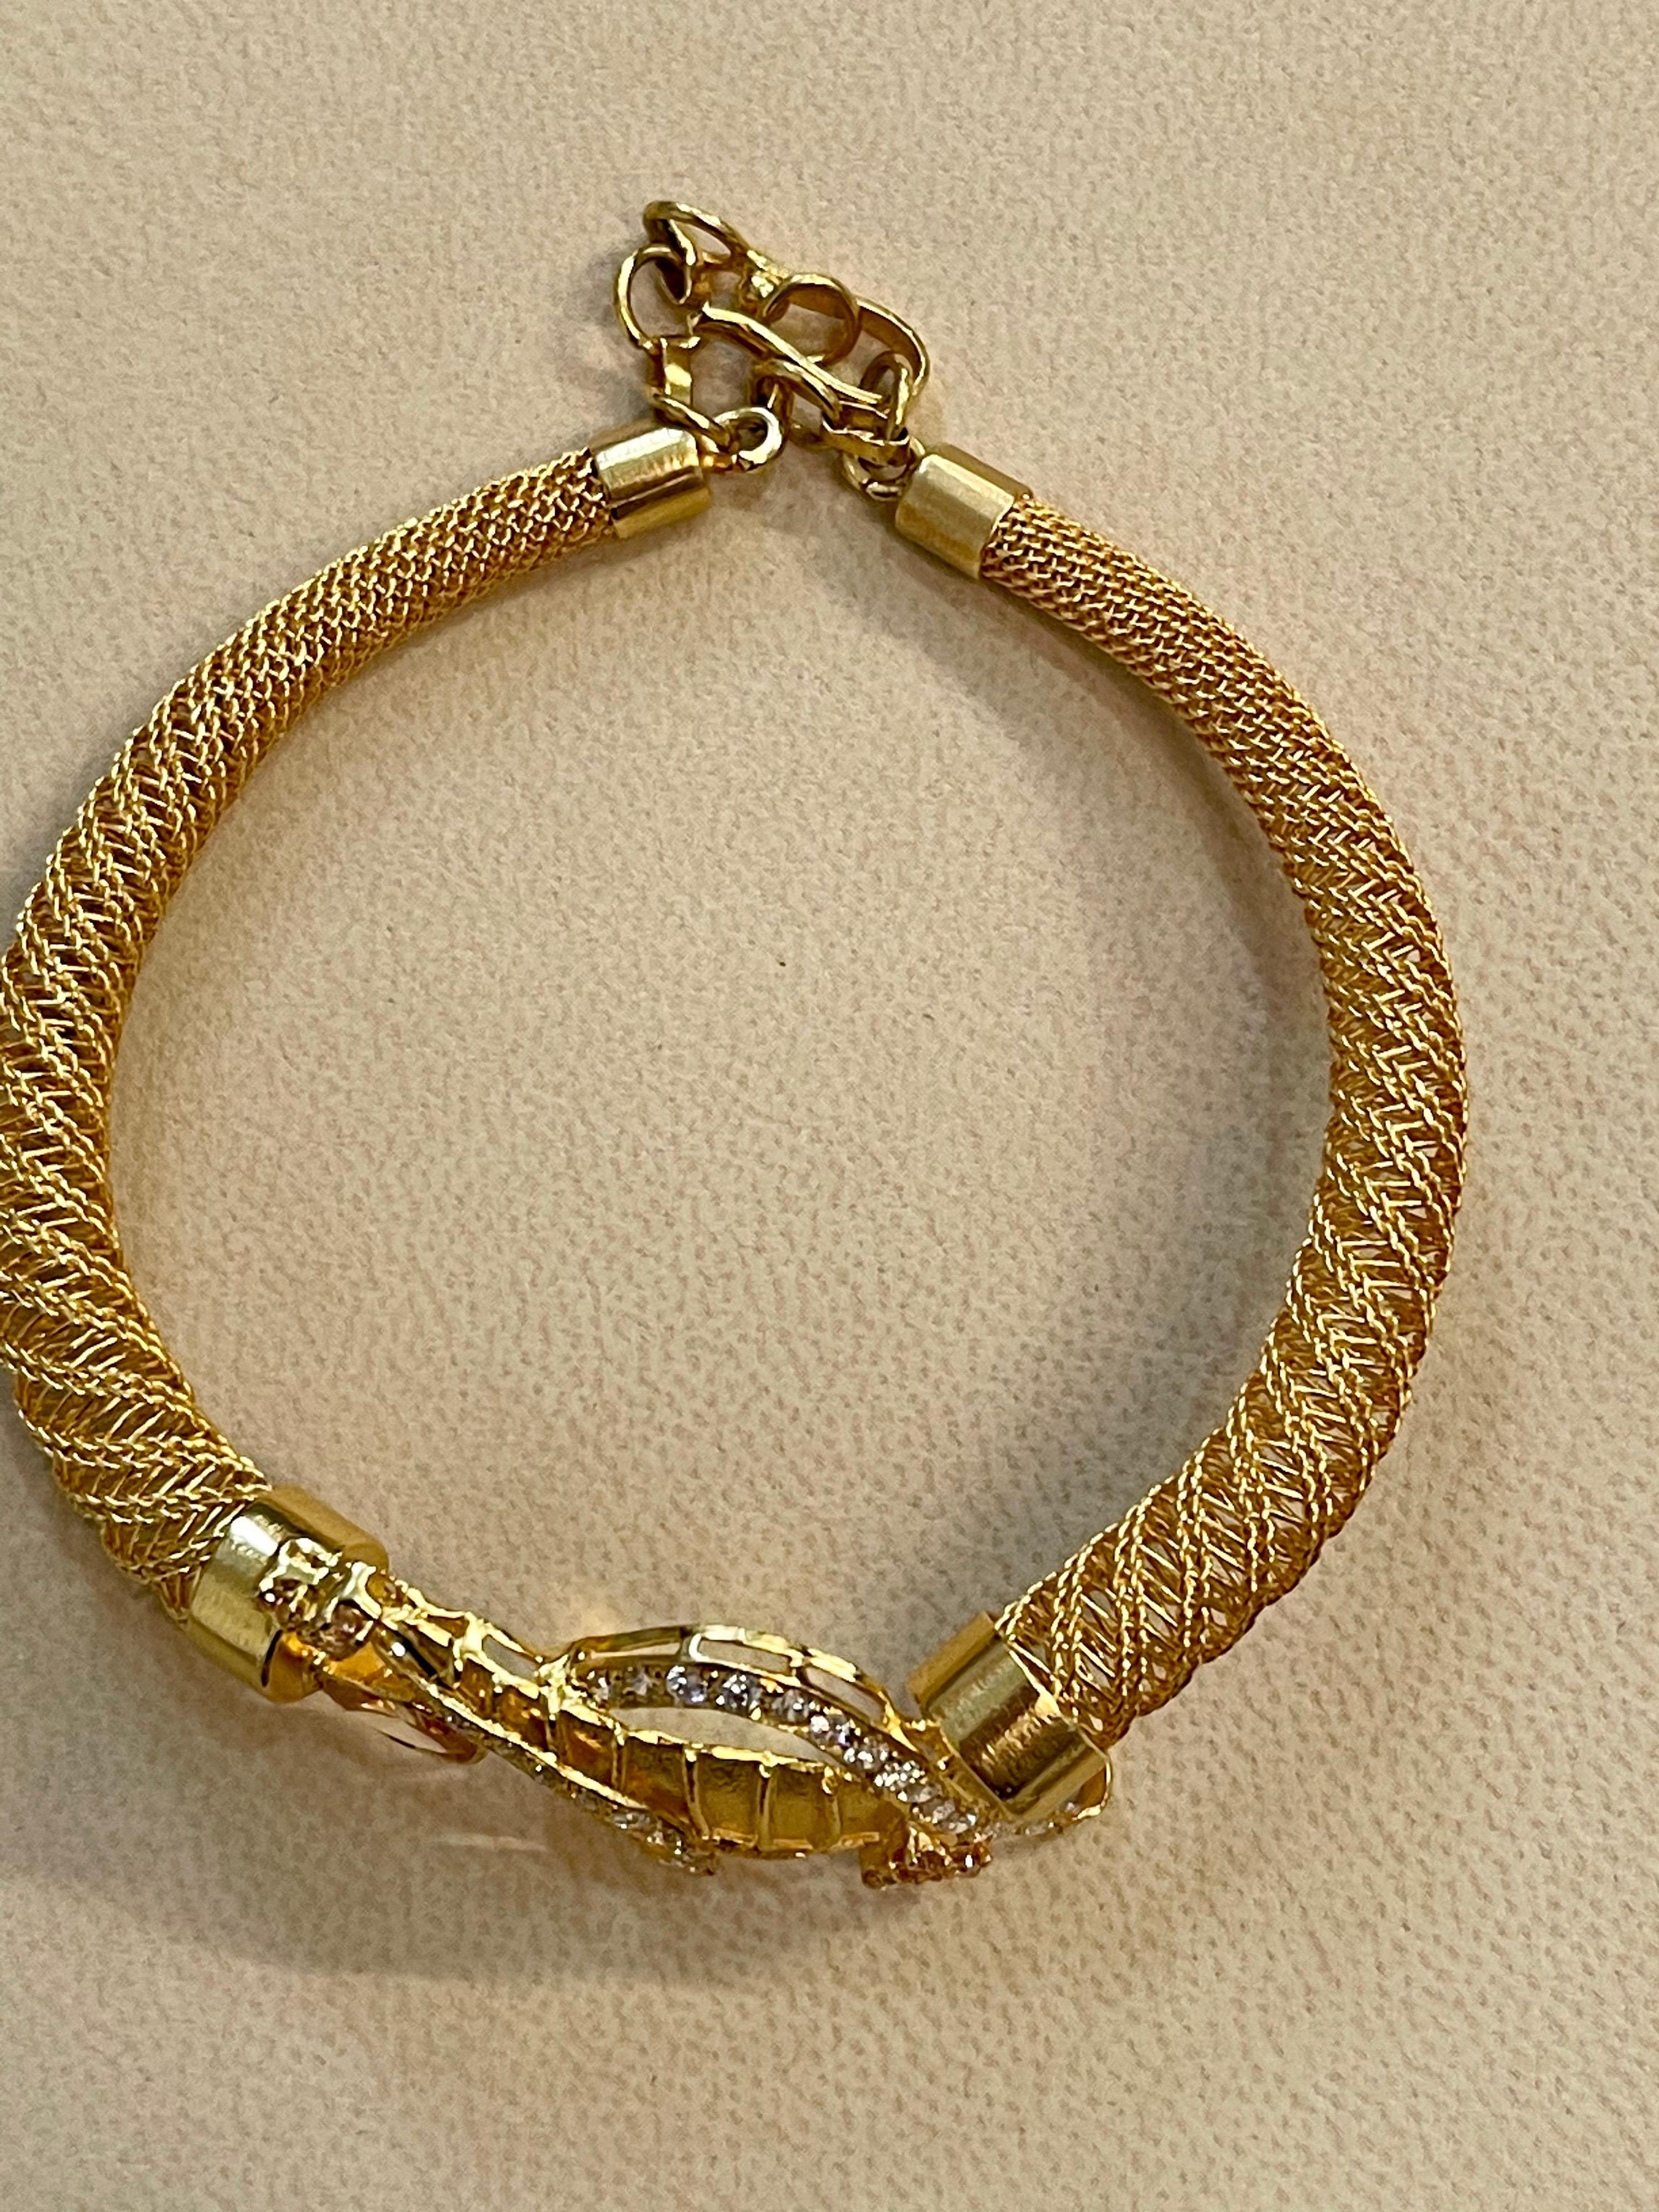 Yellow Sapphire and Diamond Bangle or Bracelet in 22 Karat Yellow Gold 20.8 Gram 3